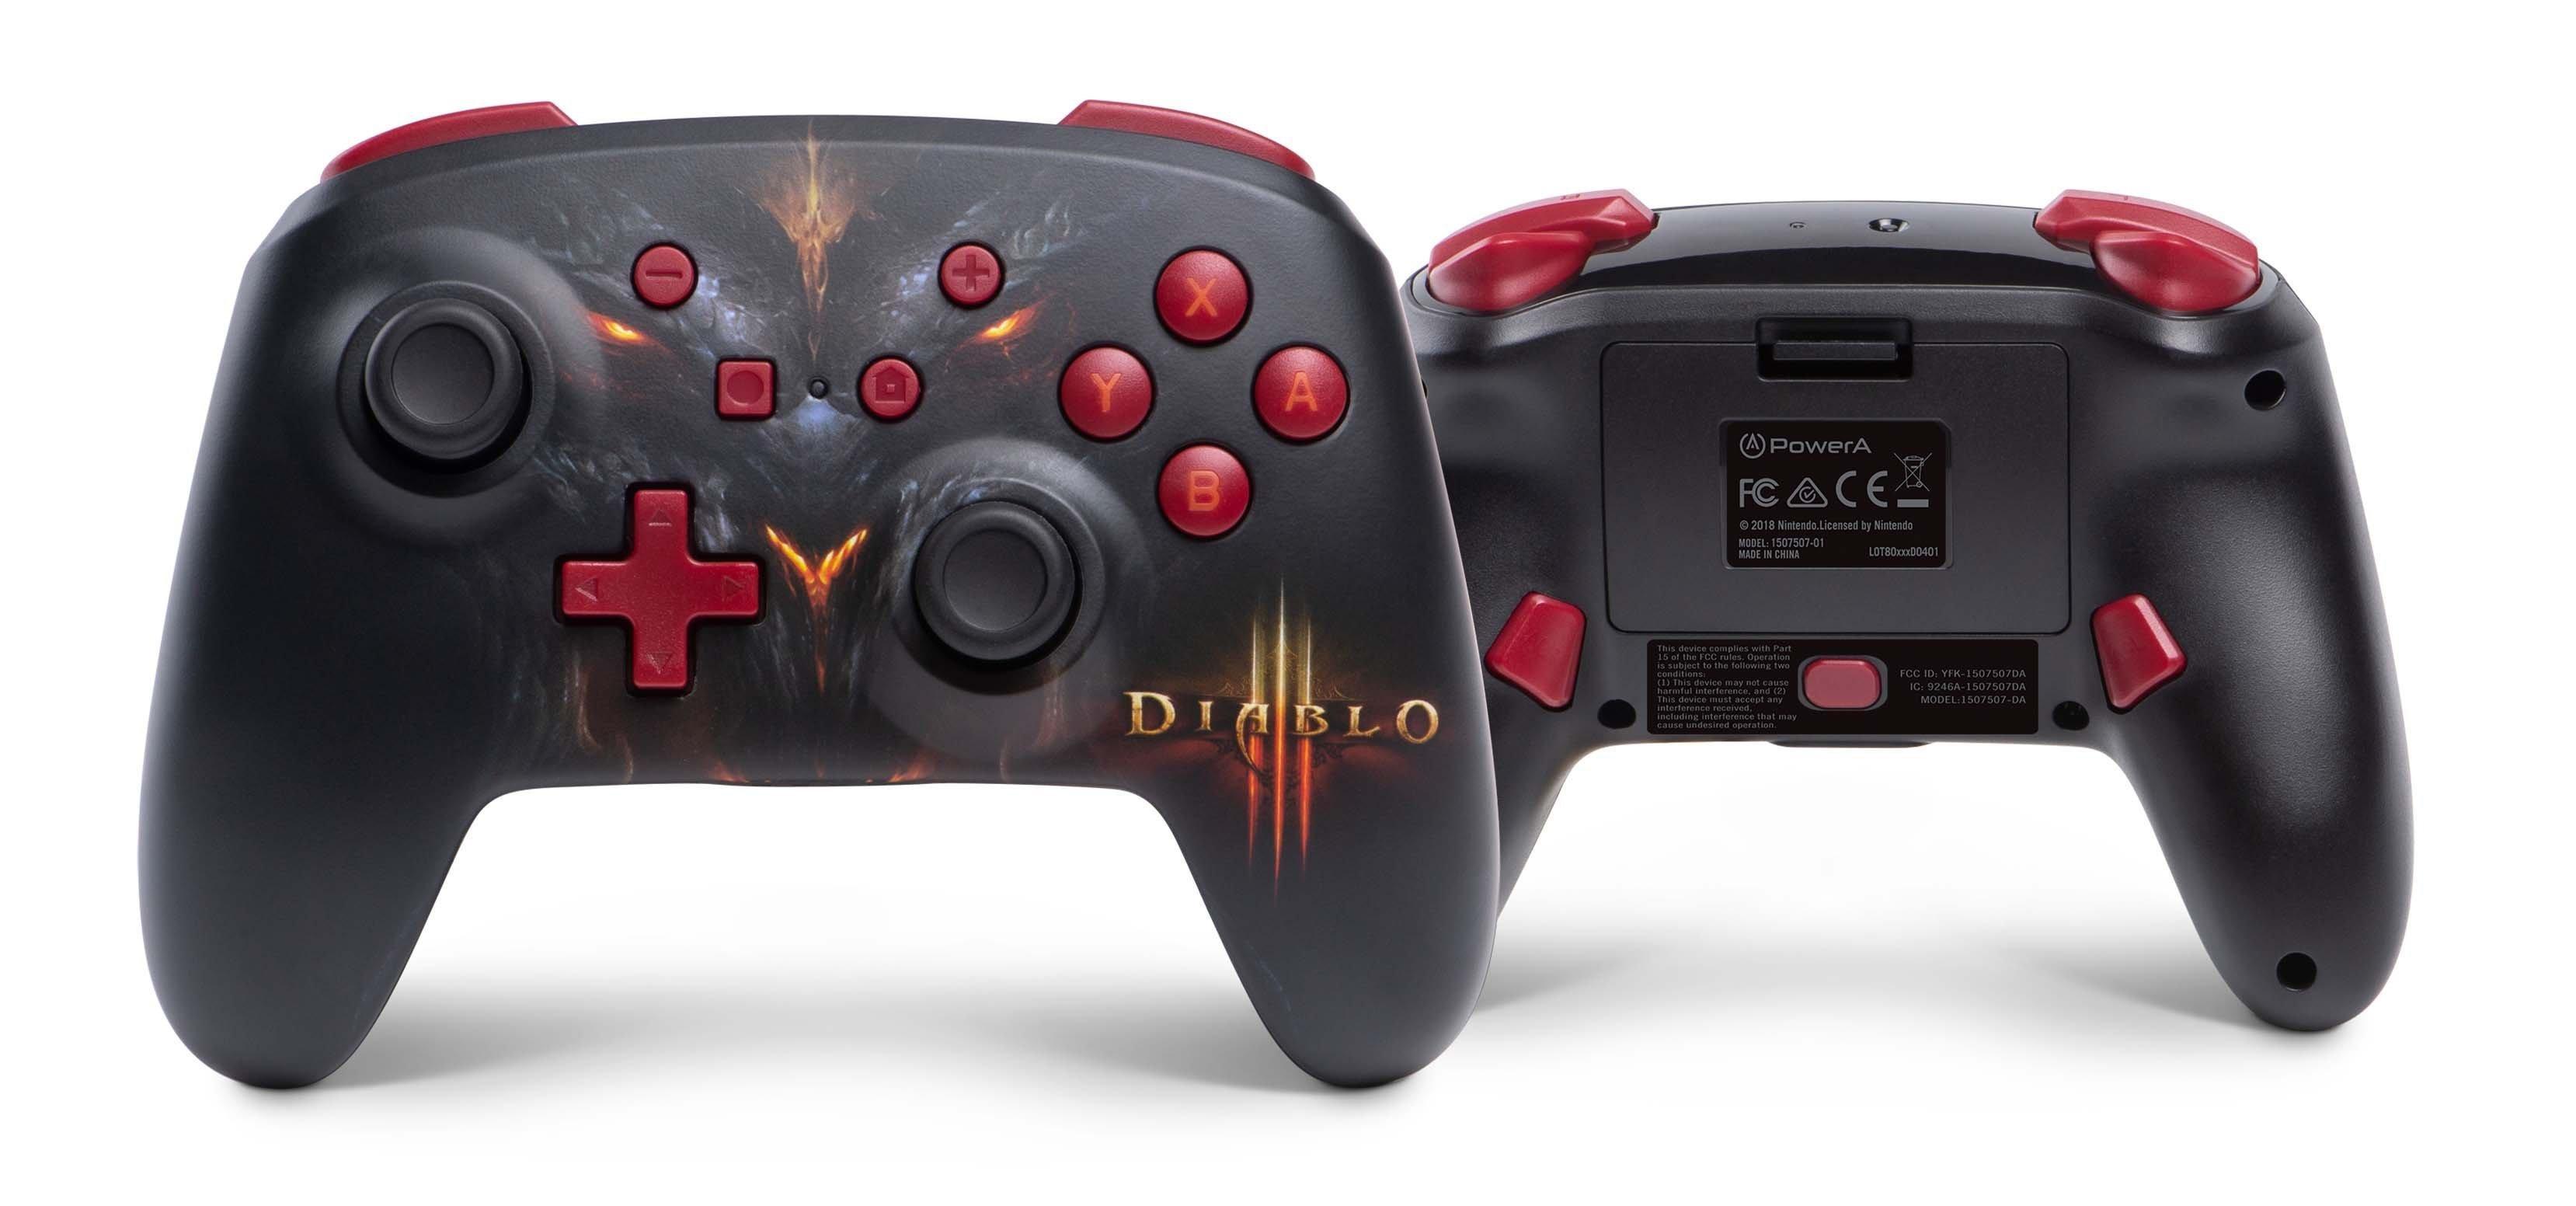 Anecdote violation operator Diablo III Enhanced Wireless Controller for Nintendo Switch Only at GameStop